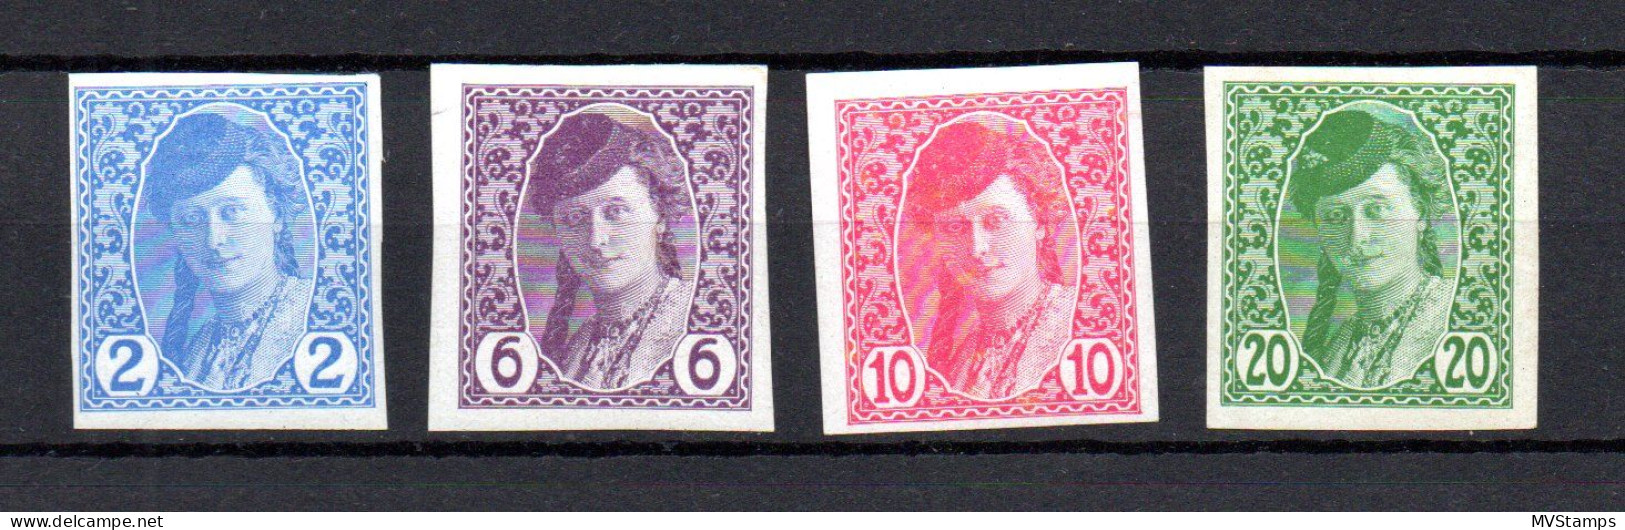 Bosnia Herzegowina (Austria) 1913 Old Set "Zeitungs" Paper-stamps (Michel 85/88) MLH - Bosnie-Herzegovine